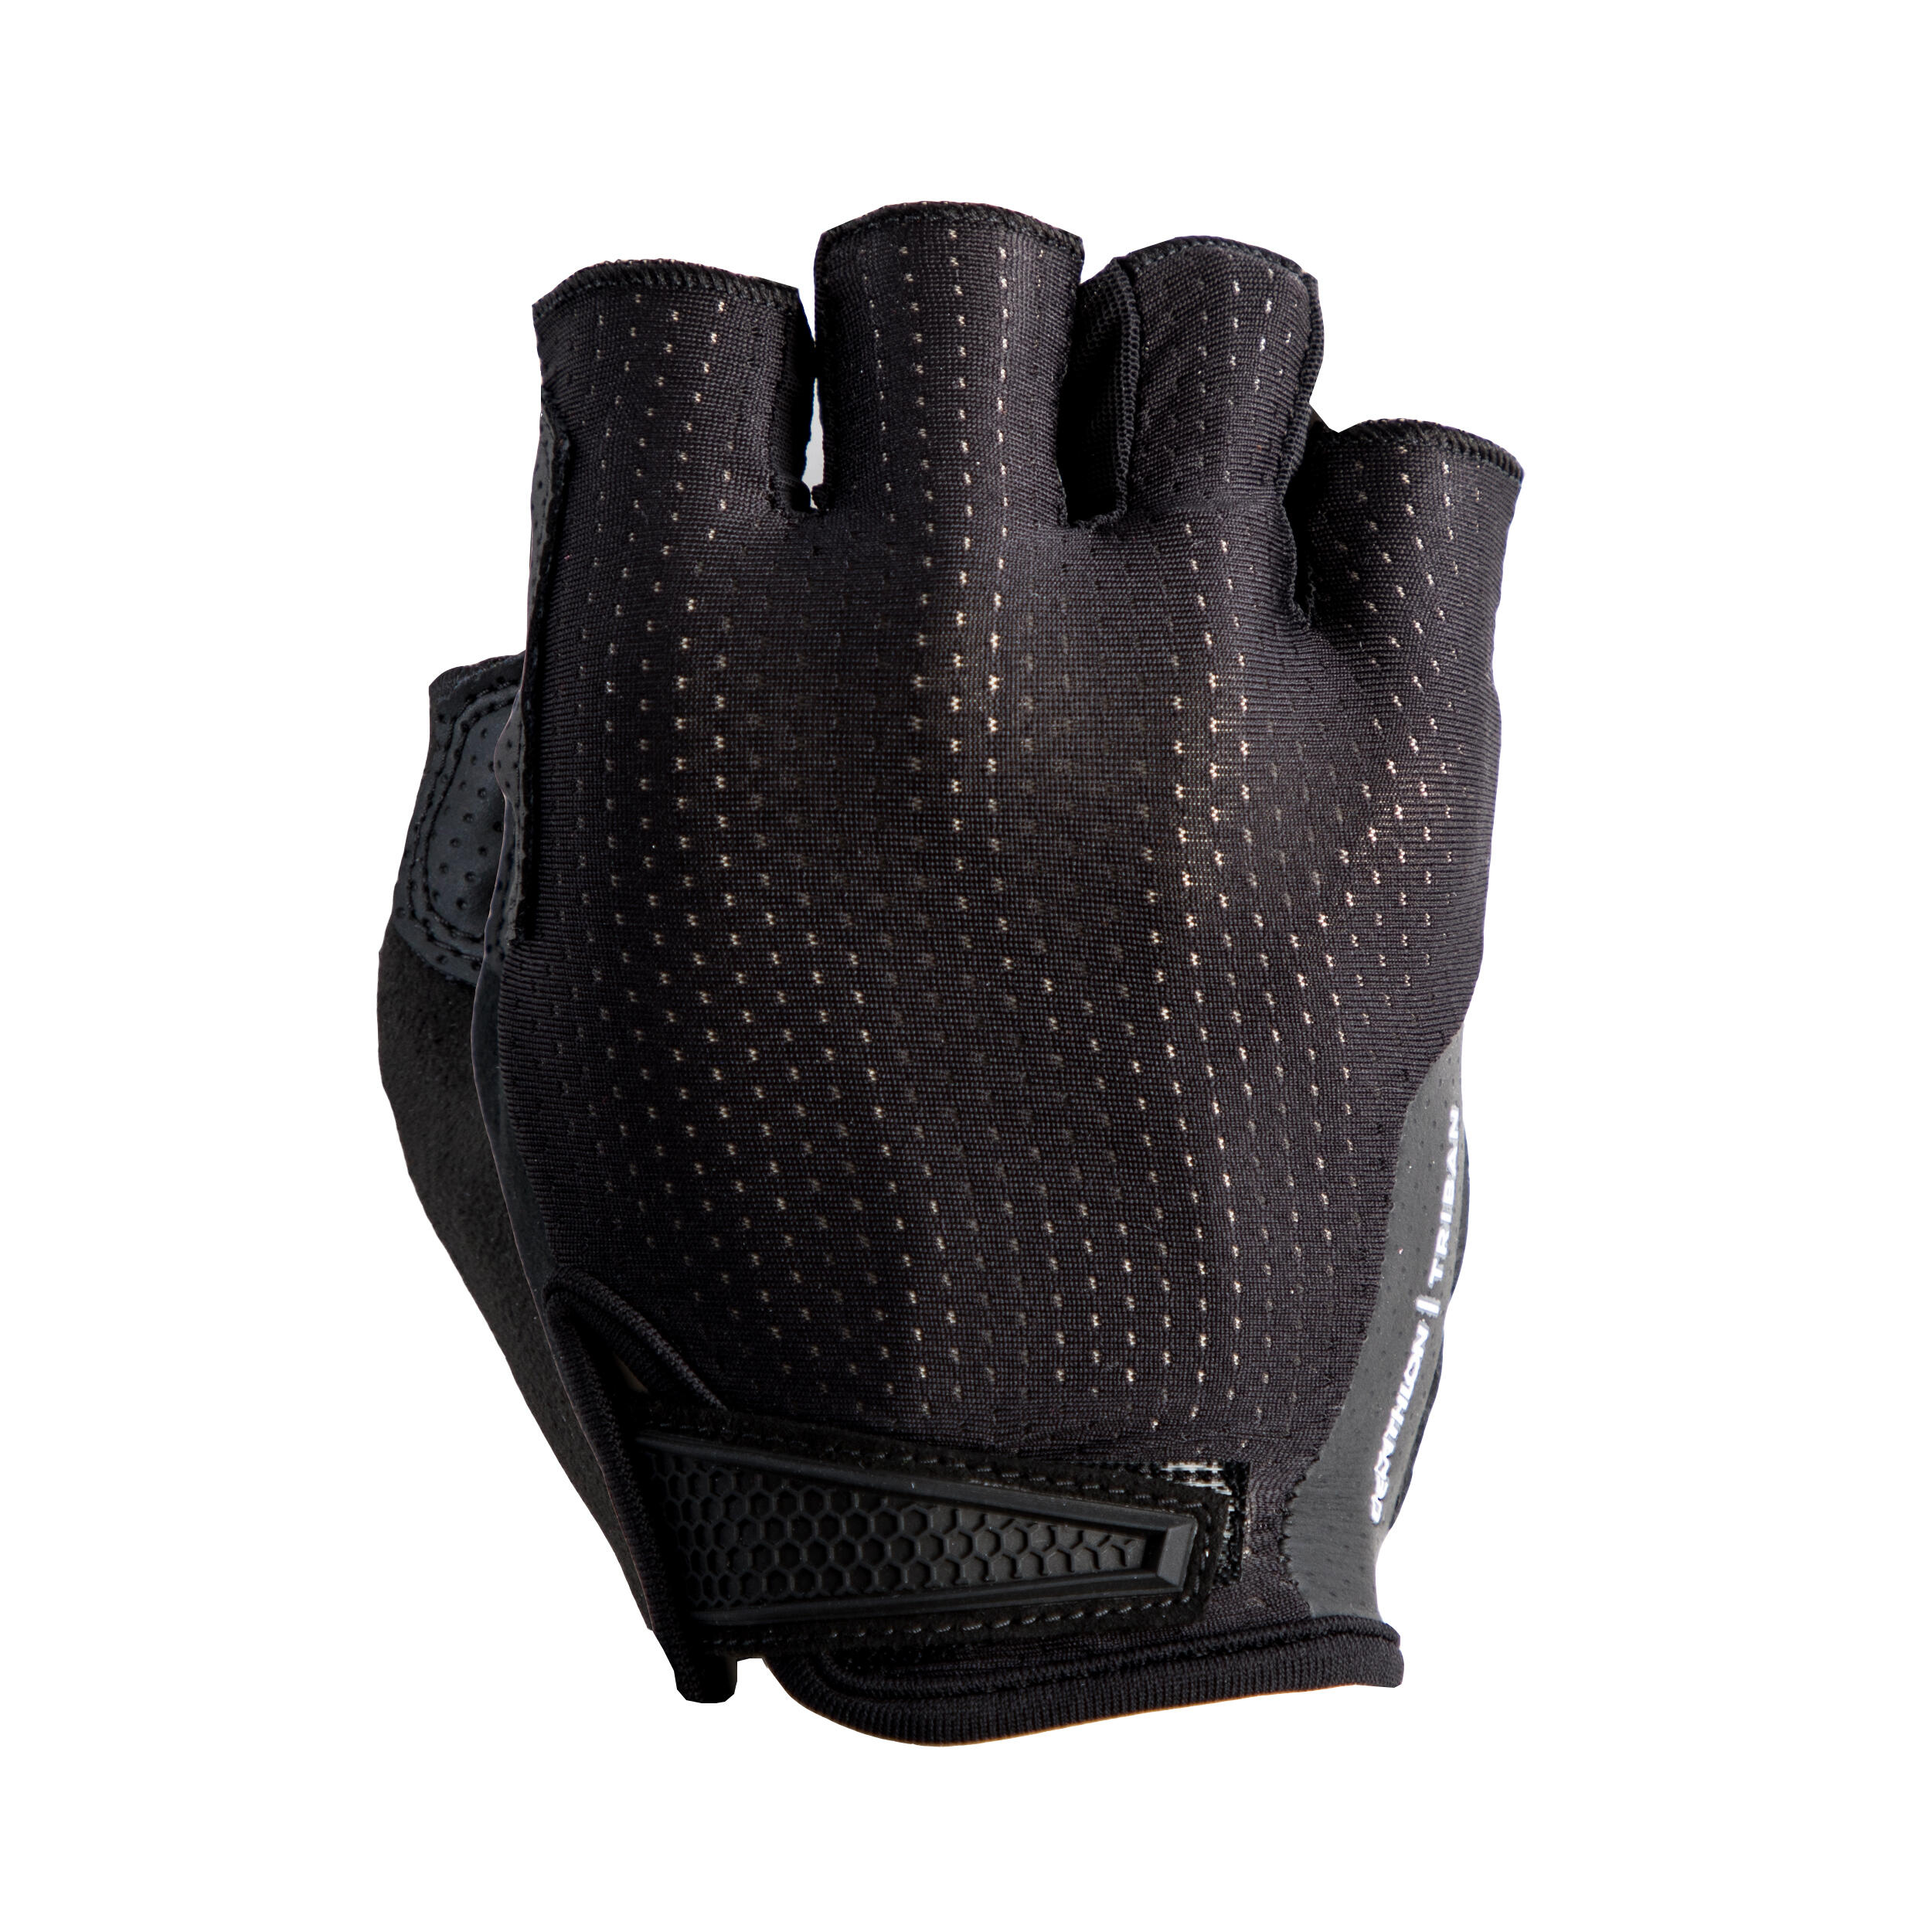 RoadC 900 Cycling Gloves - Decathlon